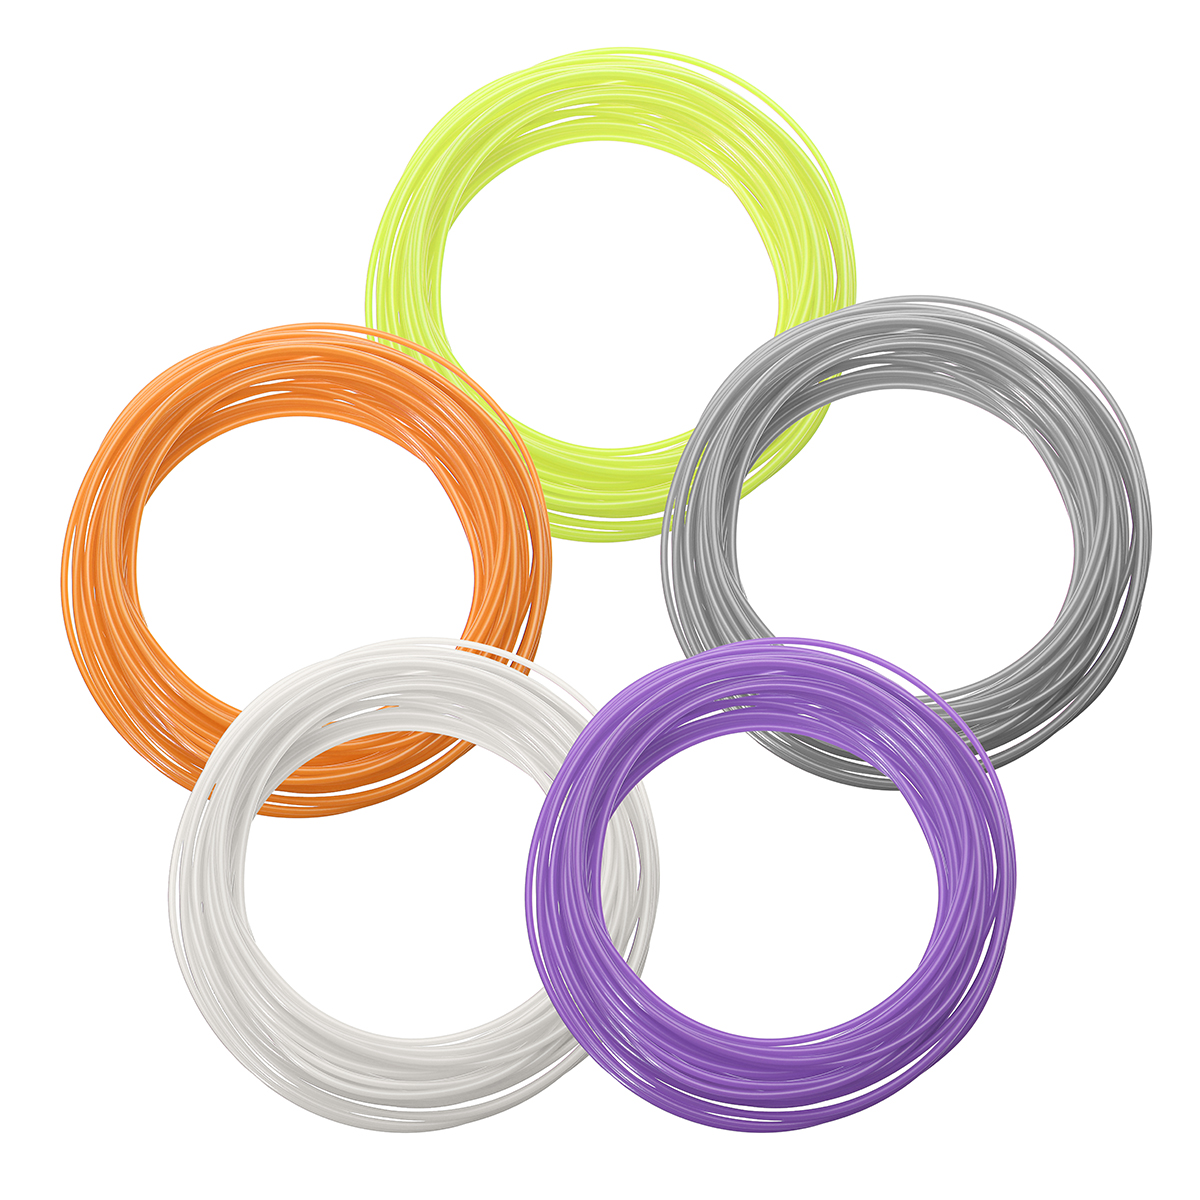 20 Colors/Pack 5/10m Length Per Color PLA 1.75mm Filament for 3D Printing Pen 0.4mm Nozzle 15